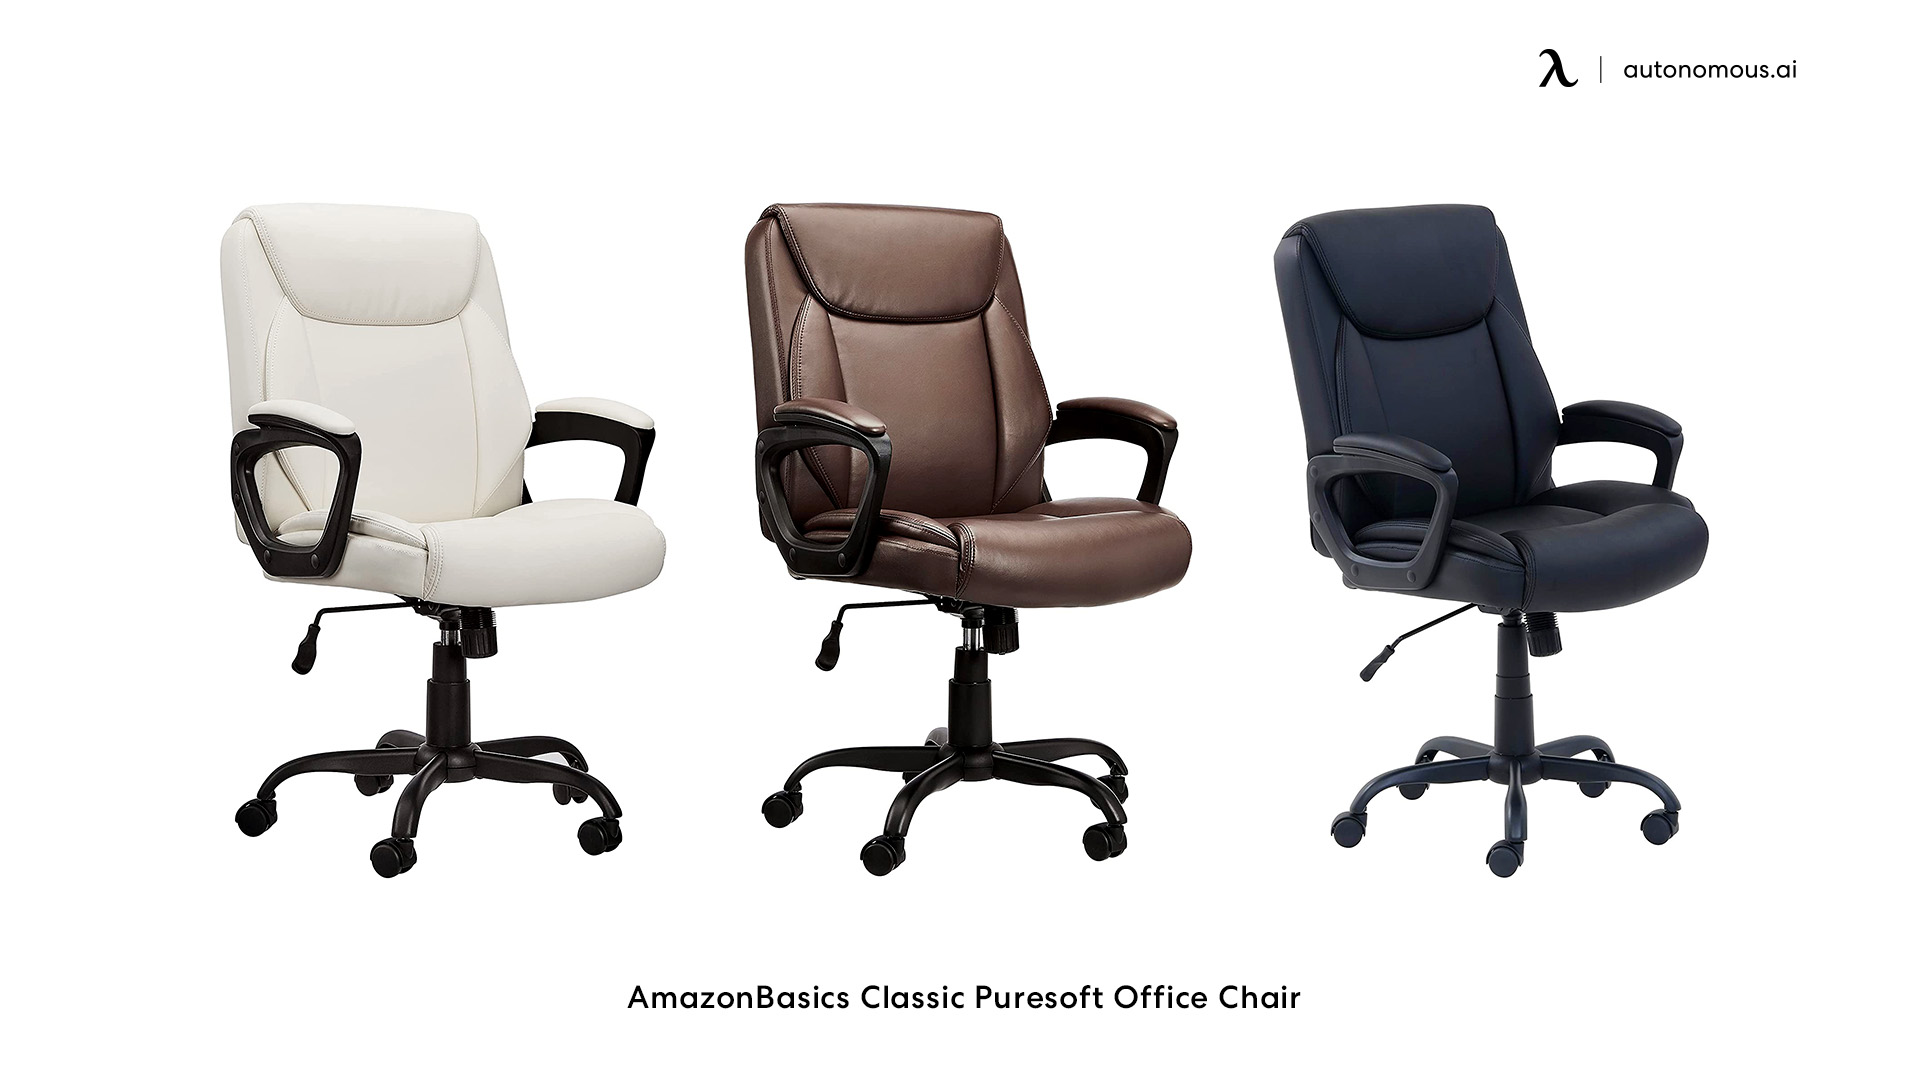 AmazonBasics Classic Puresoft Office Chair